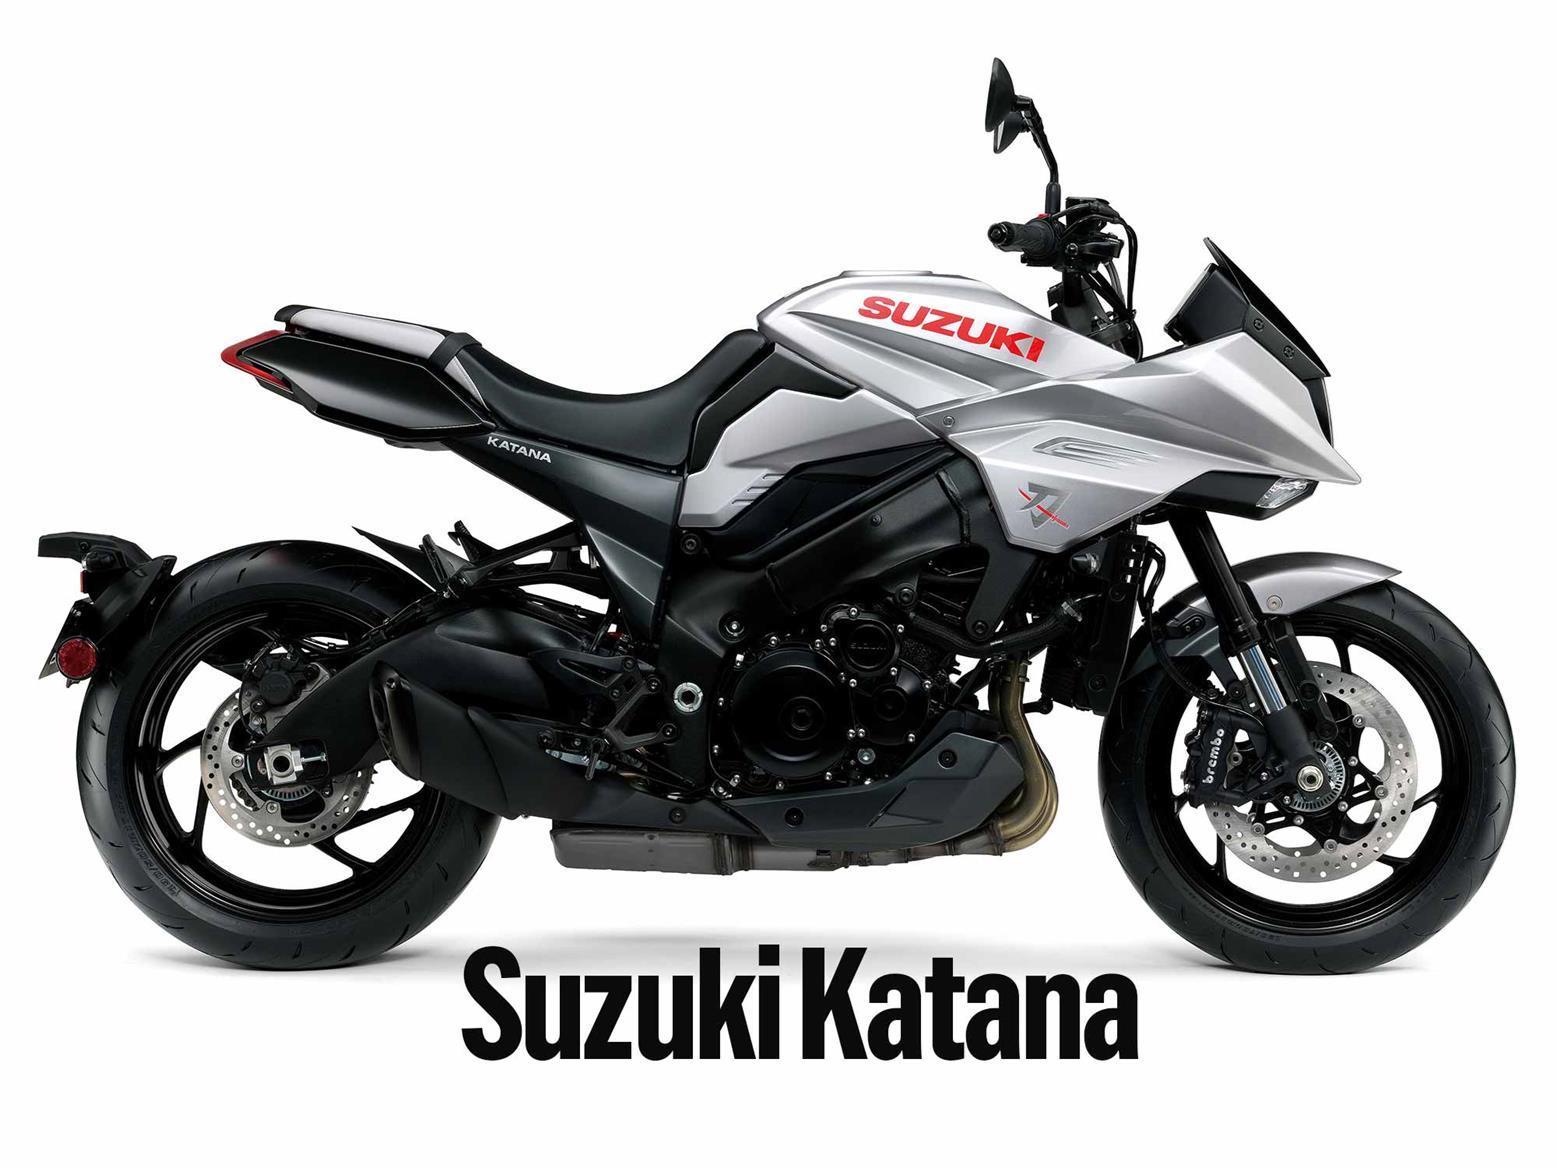 Read MCN's detailed Suzuki Katana long-term test review here